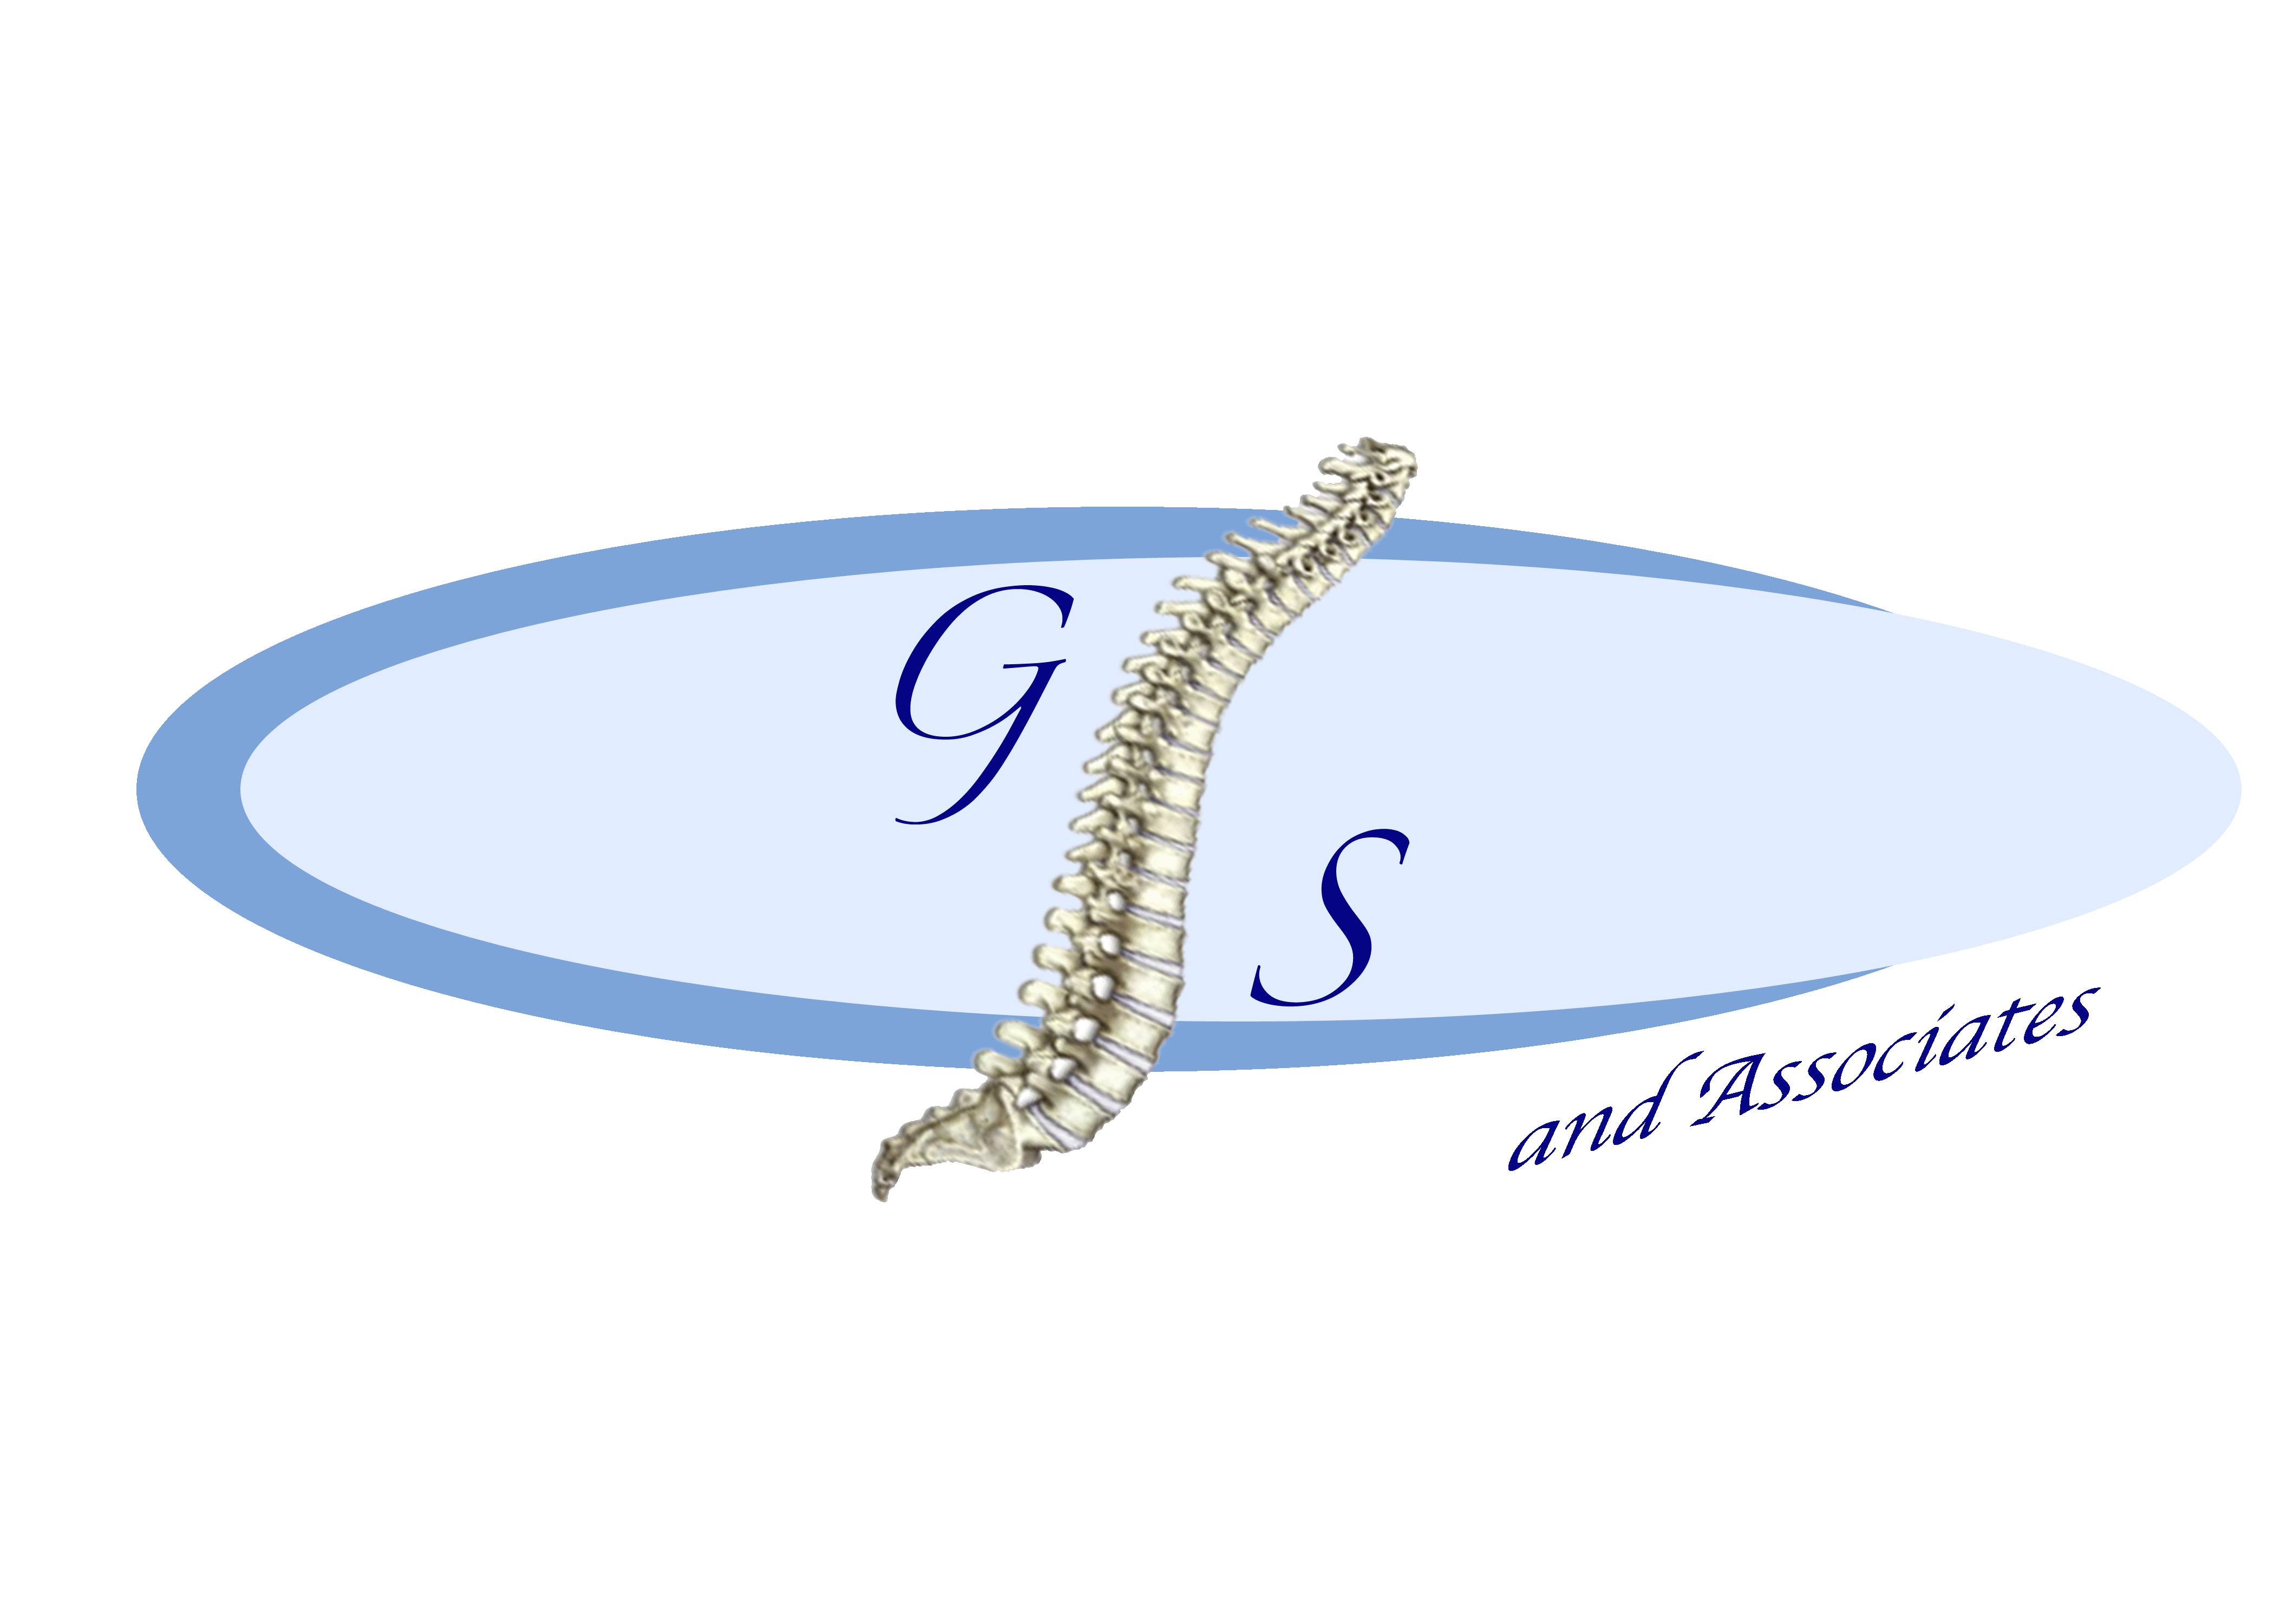 Gayle S. Schwartz, MD & Associates logo